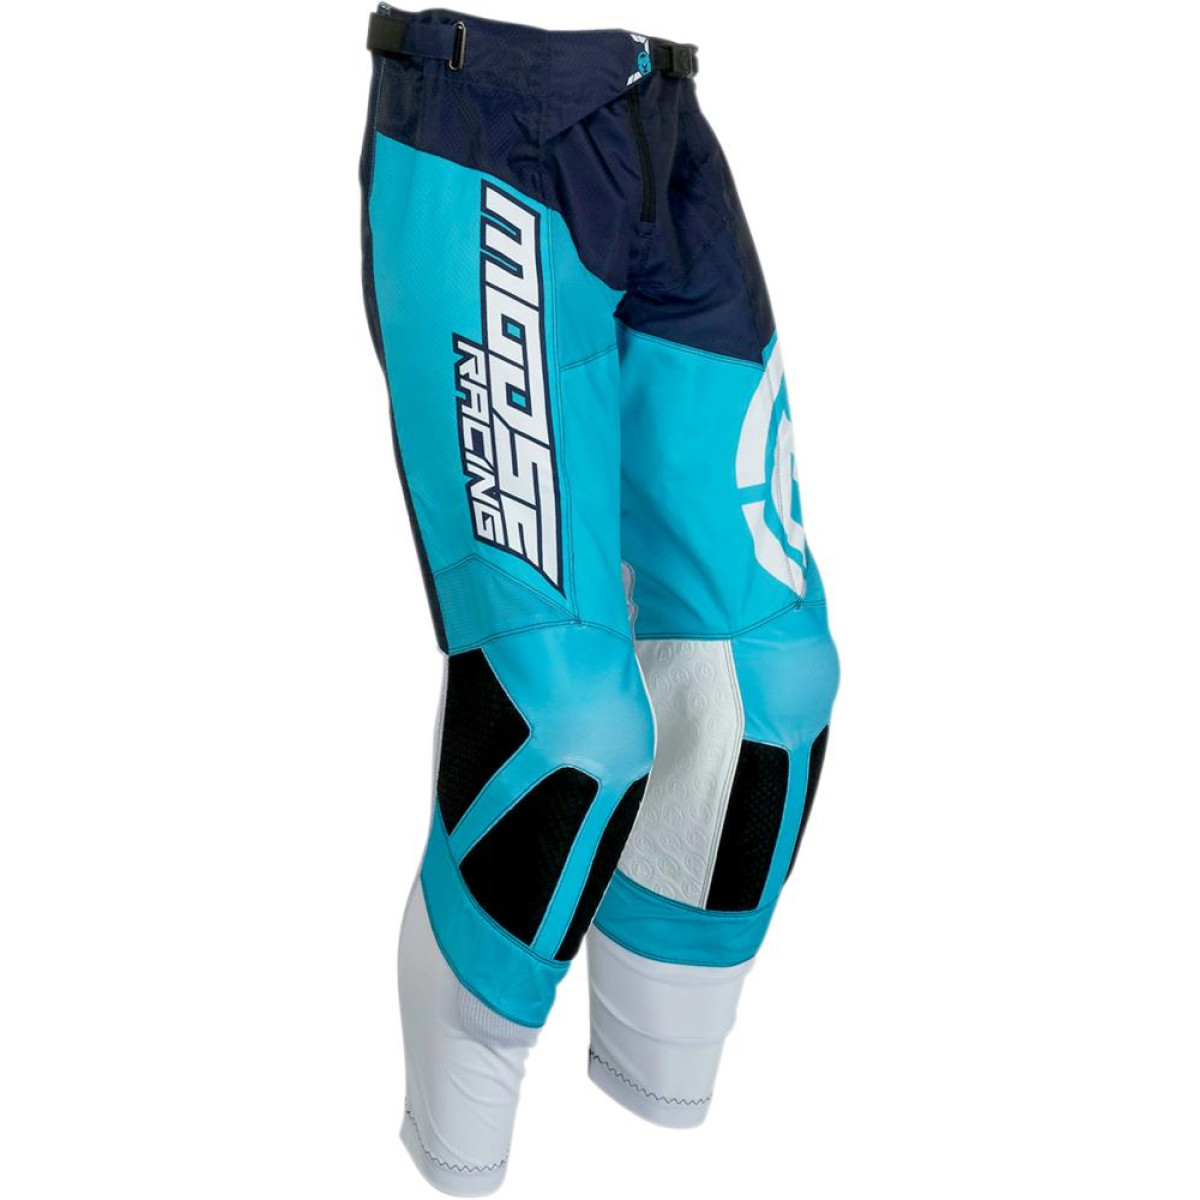 Pantaloni Motocross Moose Racing M1 Albastru/alb Marime 34